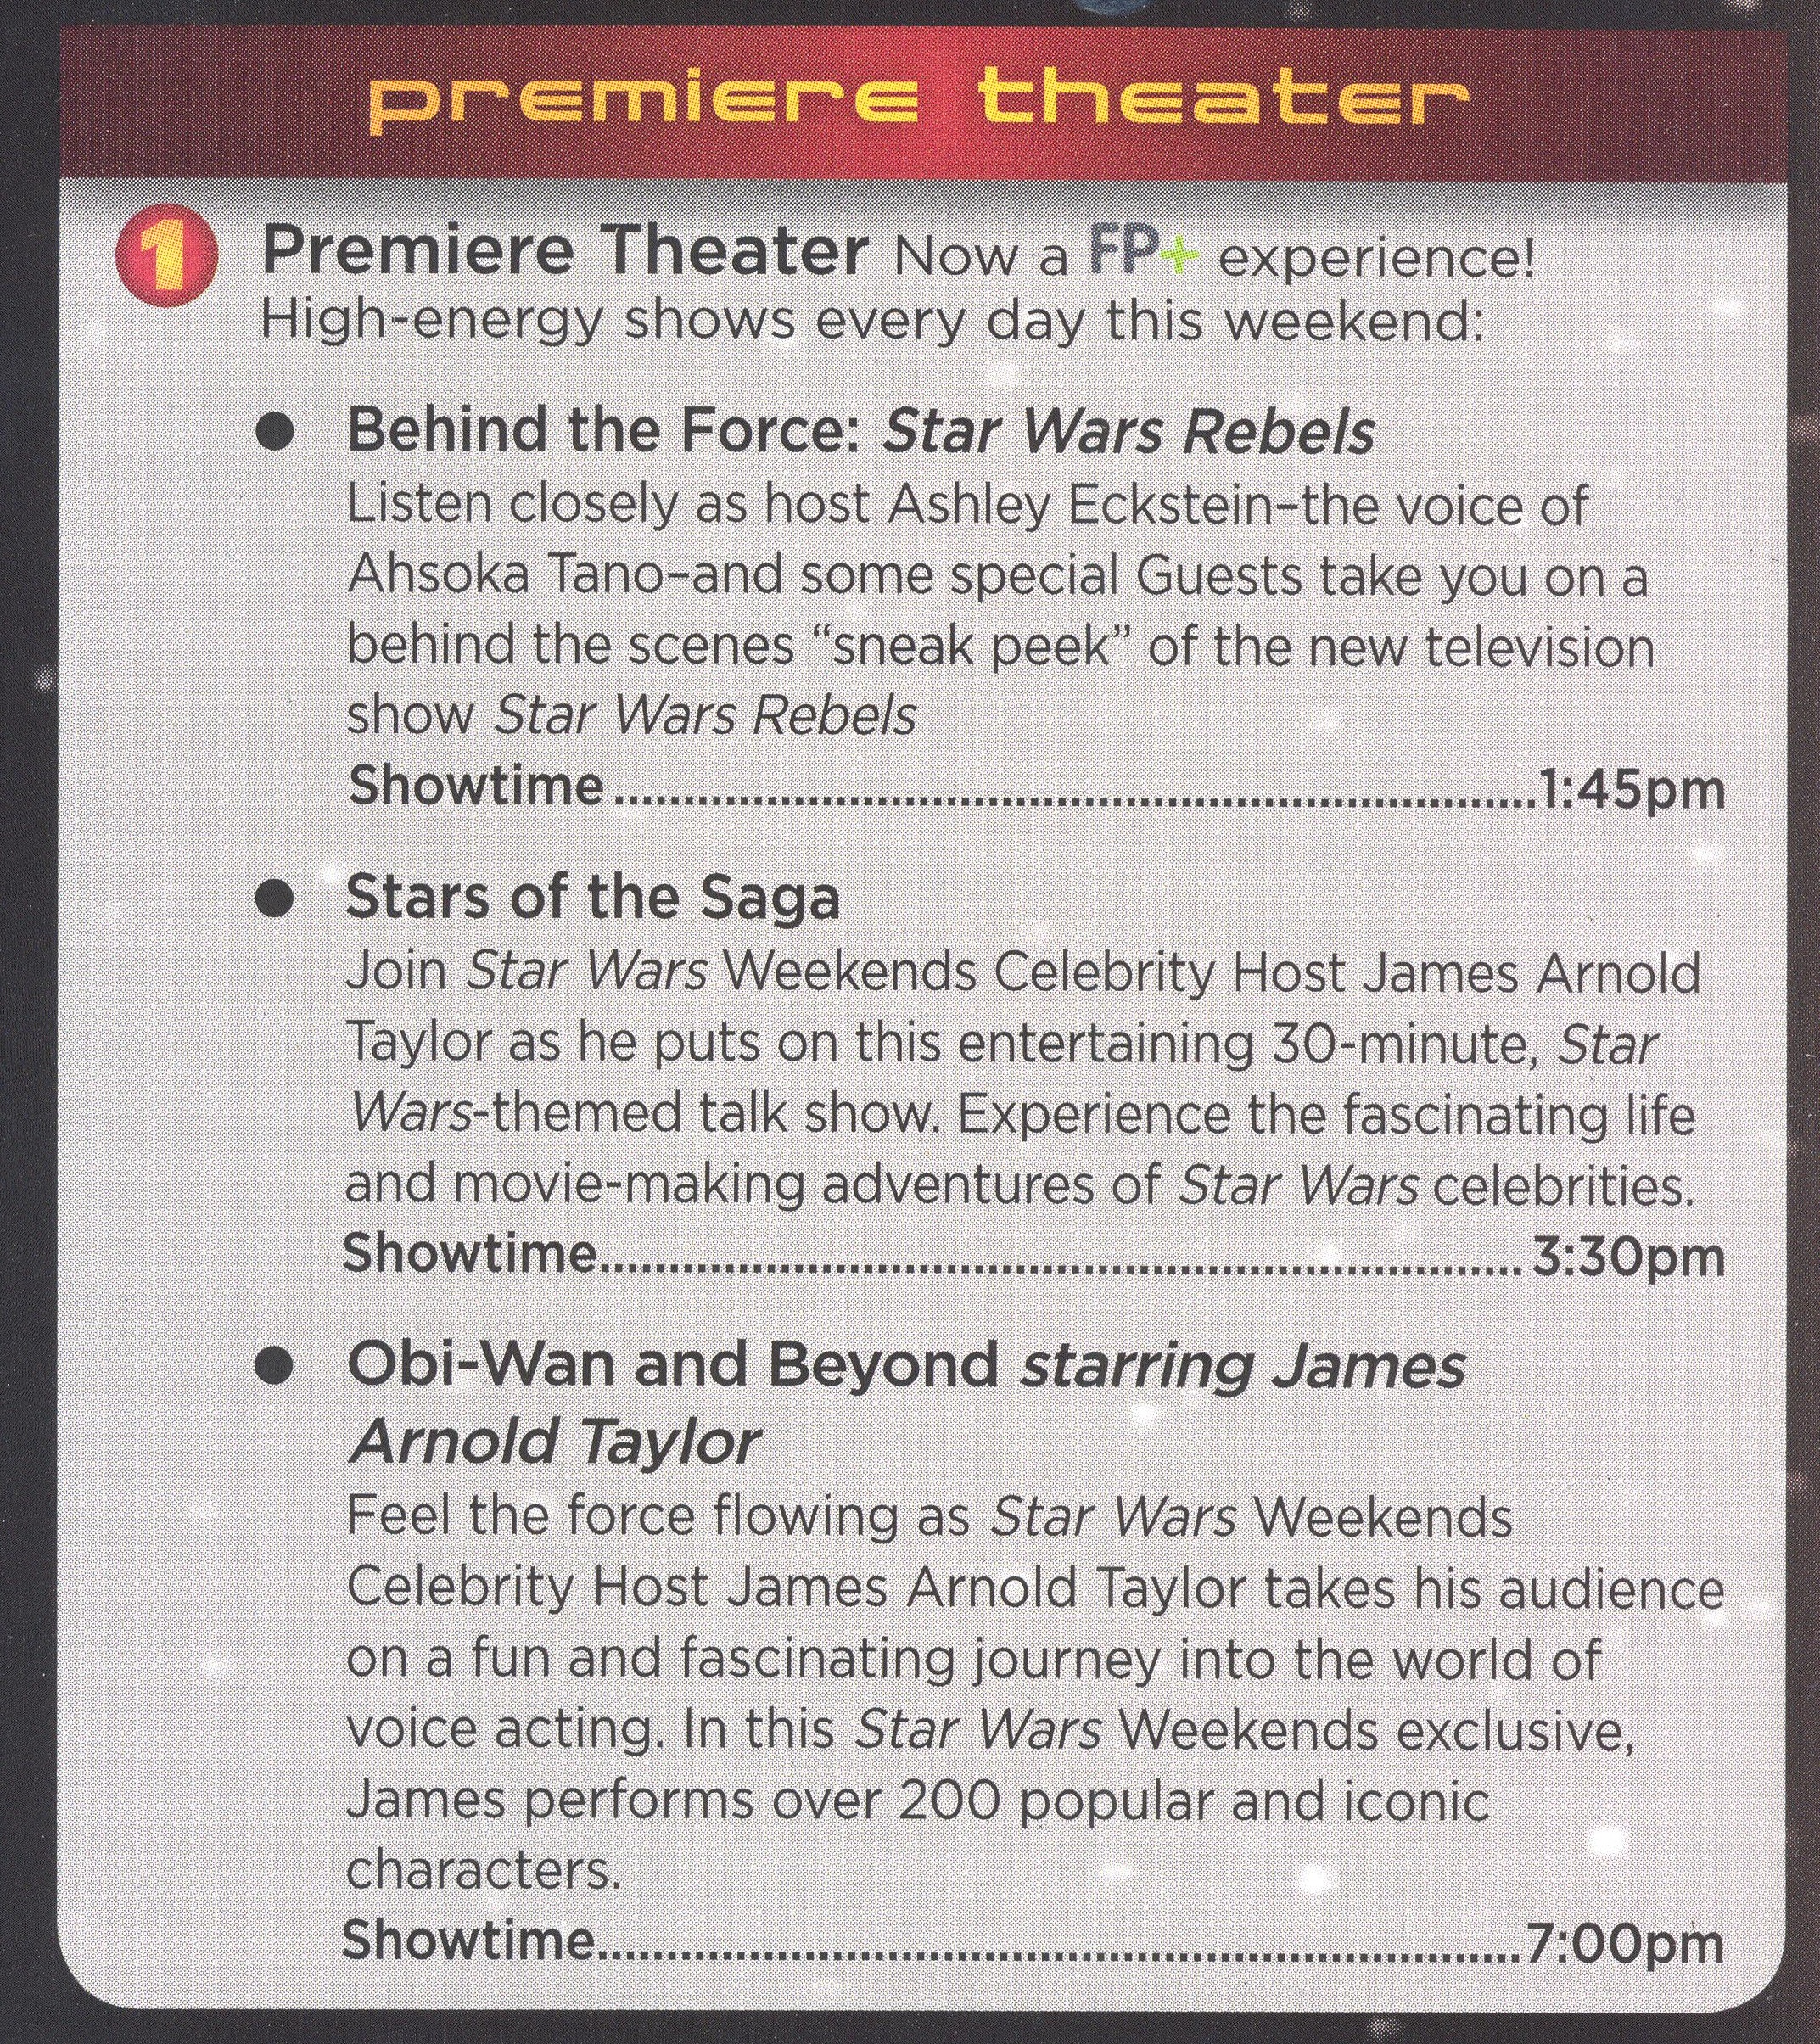 Star Wars Weekend 2014 - Premiere Theater